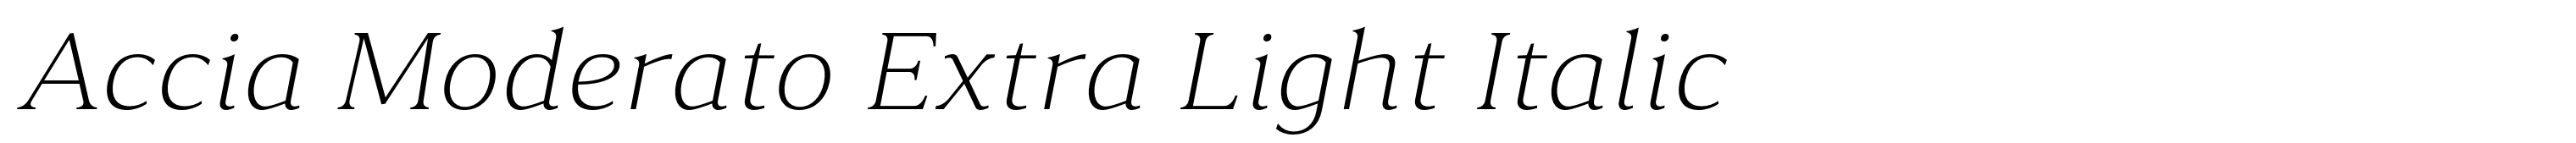 Accia Moderato Extra Light Italic